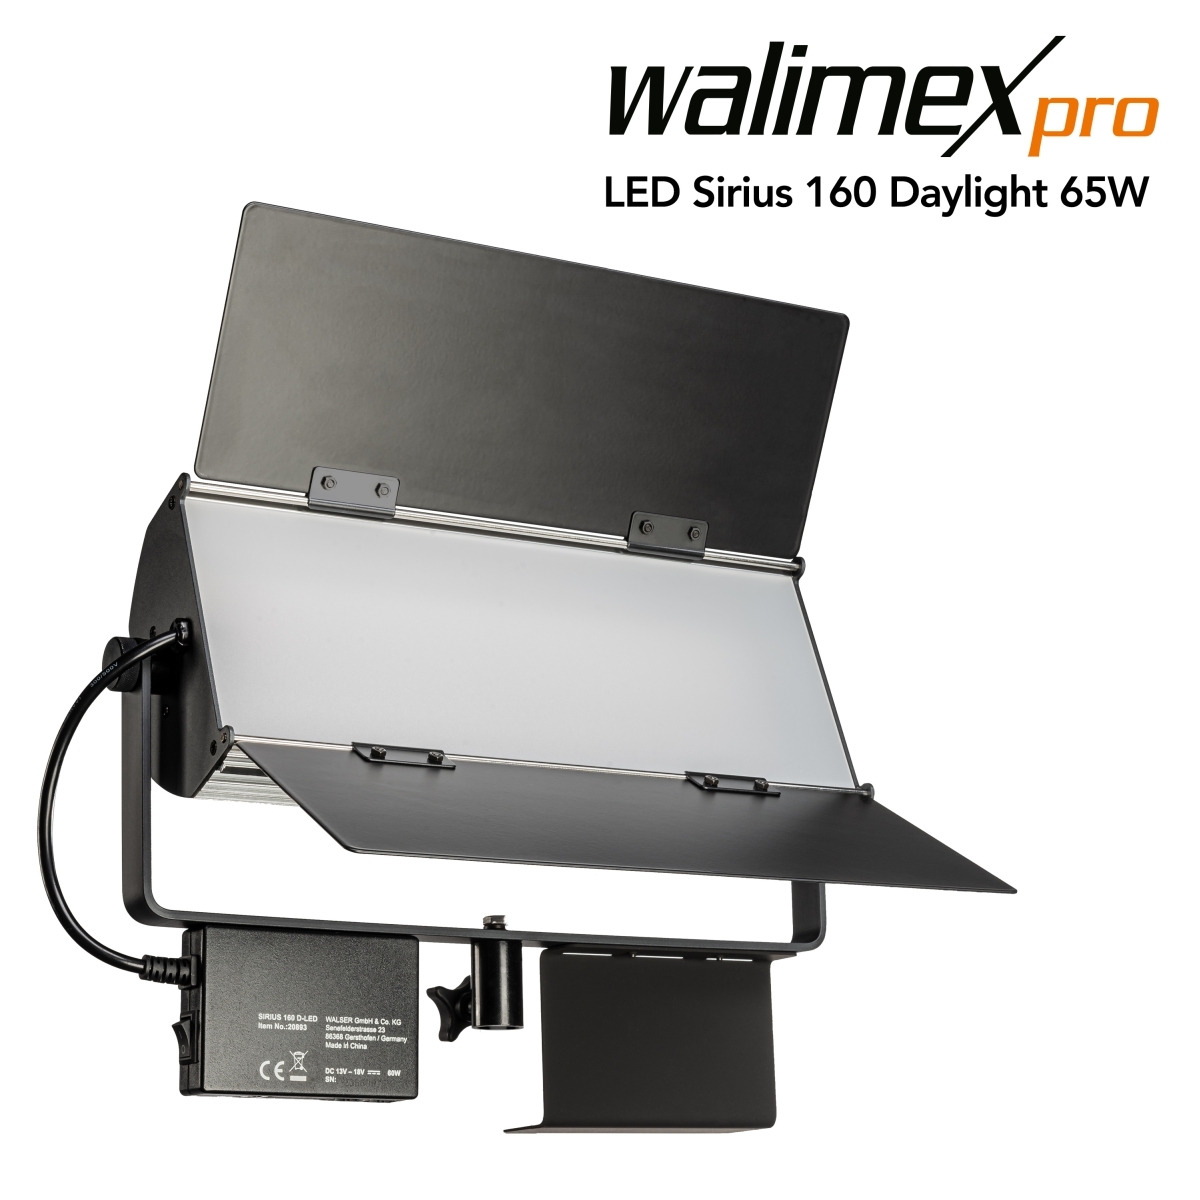 Walimex pro LED Sirius 160 Luce diurna 65W Luce darea LED